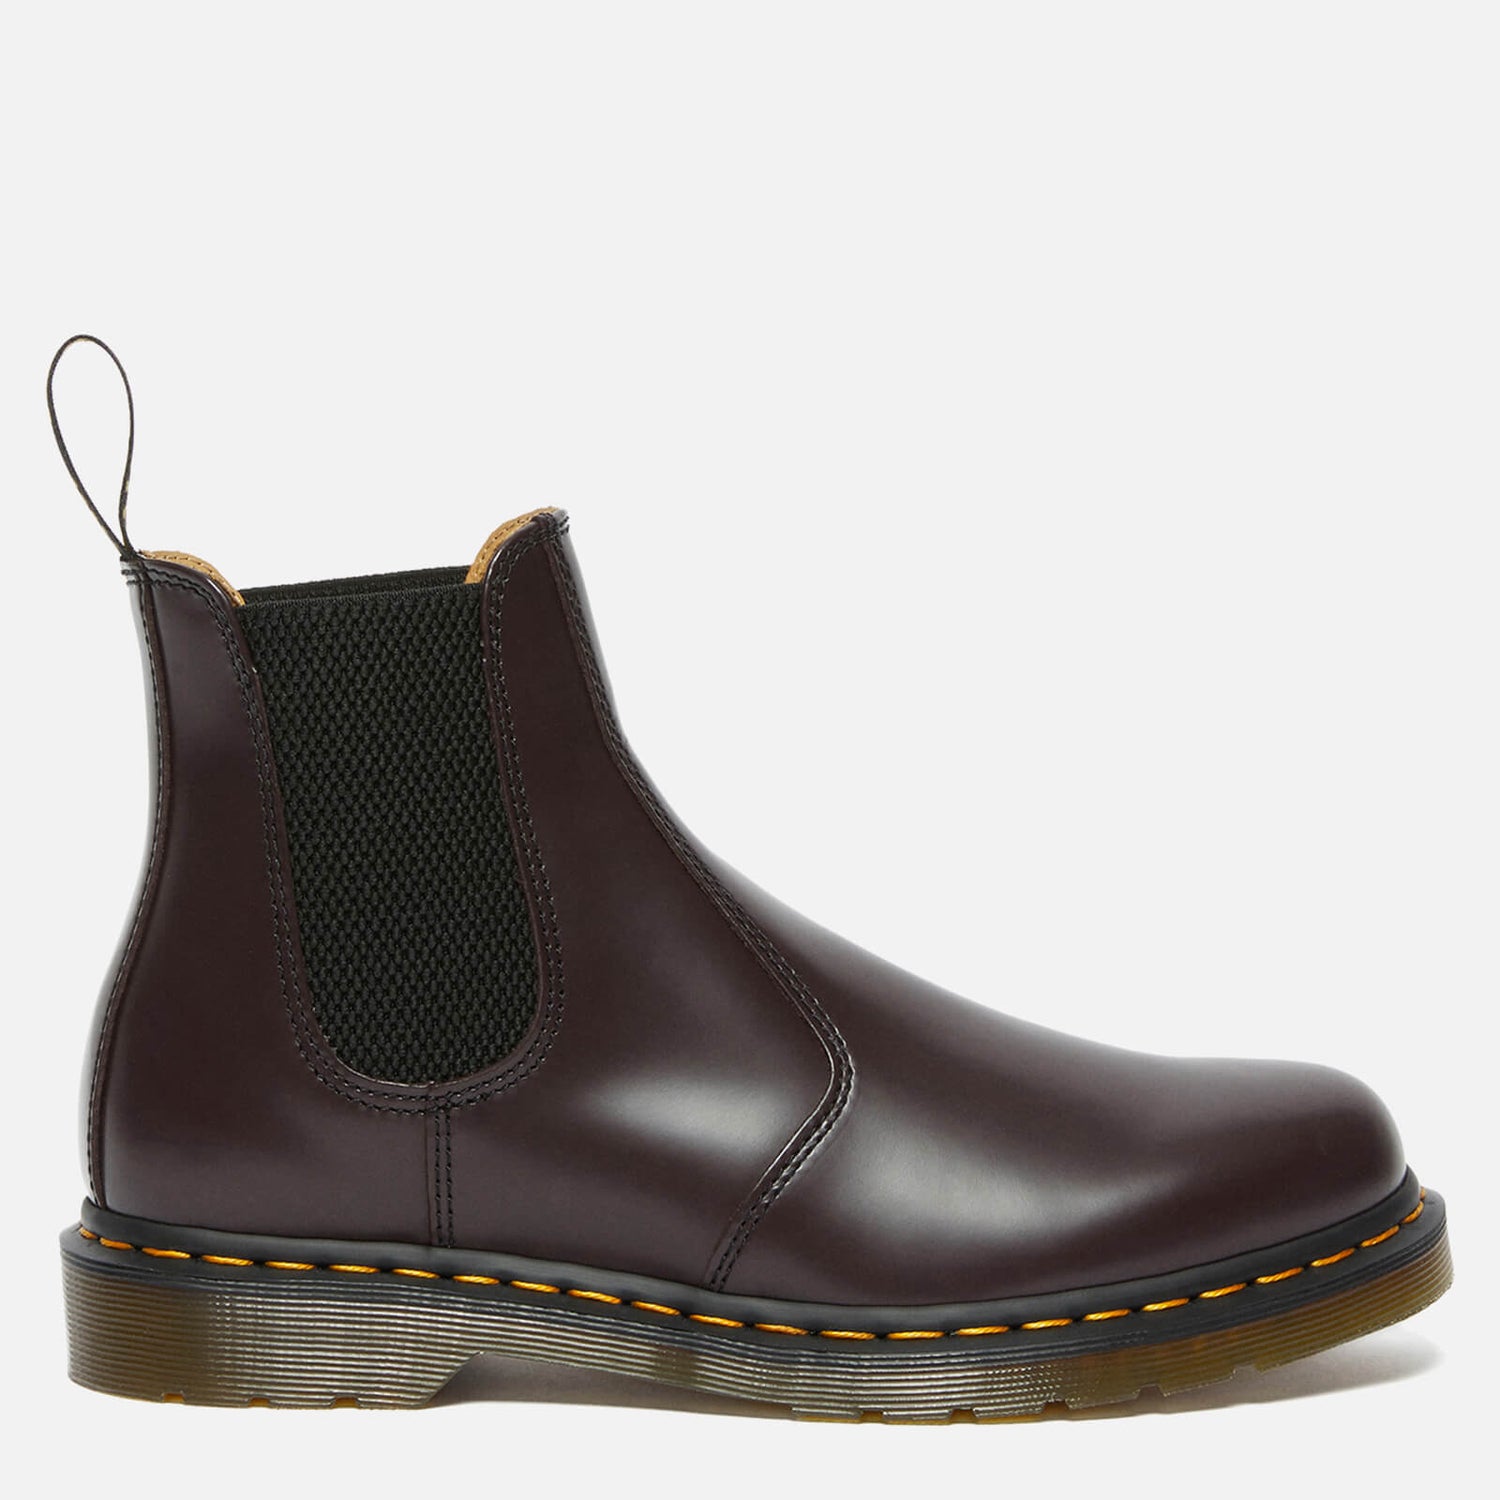 Dr. Martens Men's 2976 Smooth Leather Chelsea Boots - Burgundy - UK 8